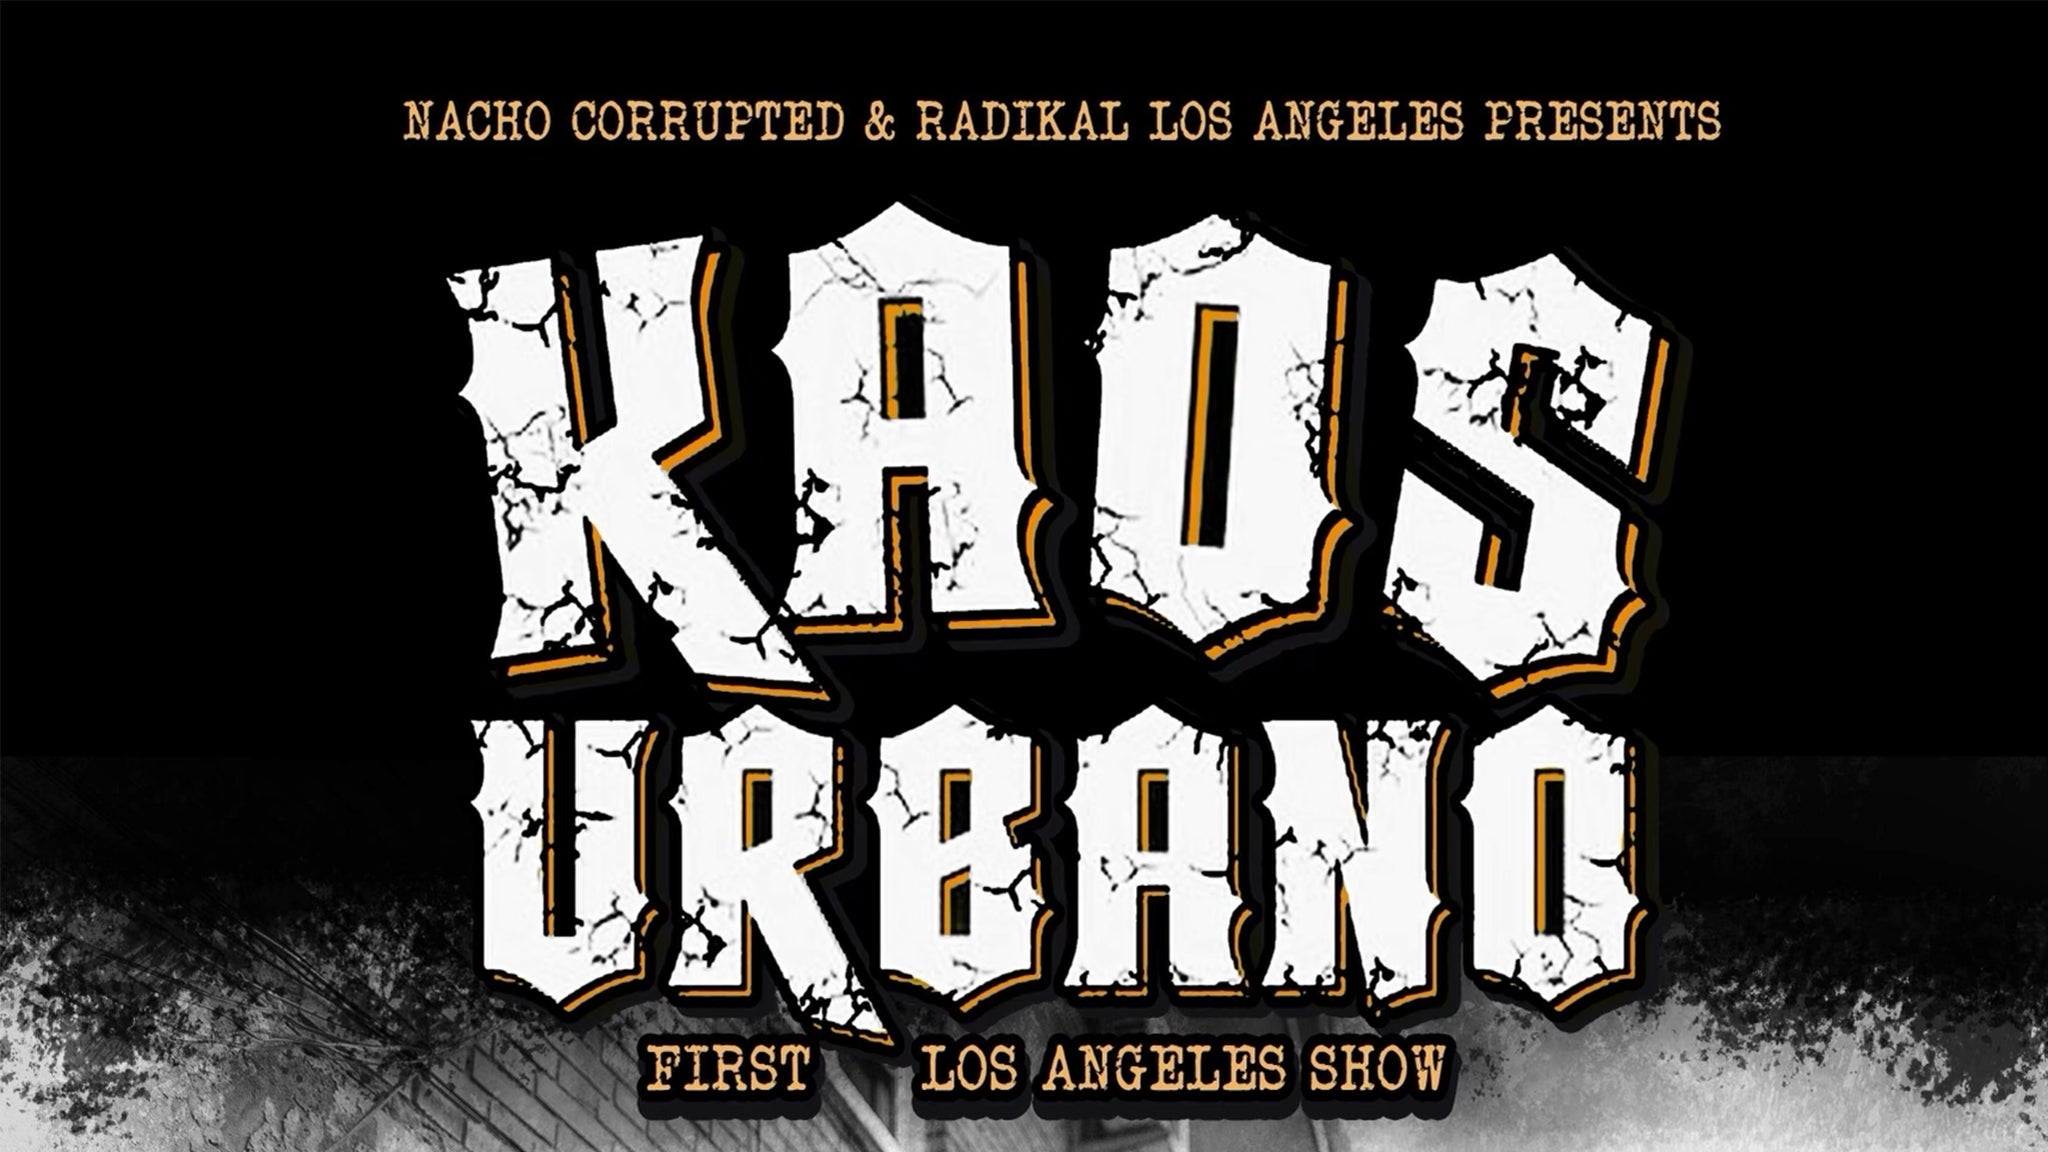 Main image for event titled Nacho Corrupted & Radikal Los Angeles present Kaos Urbano